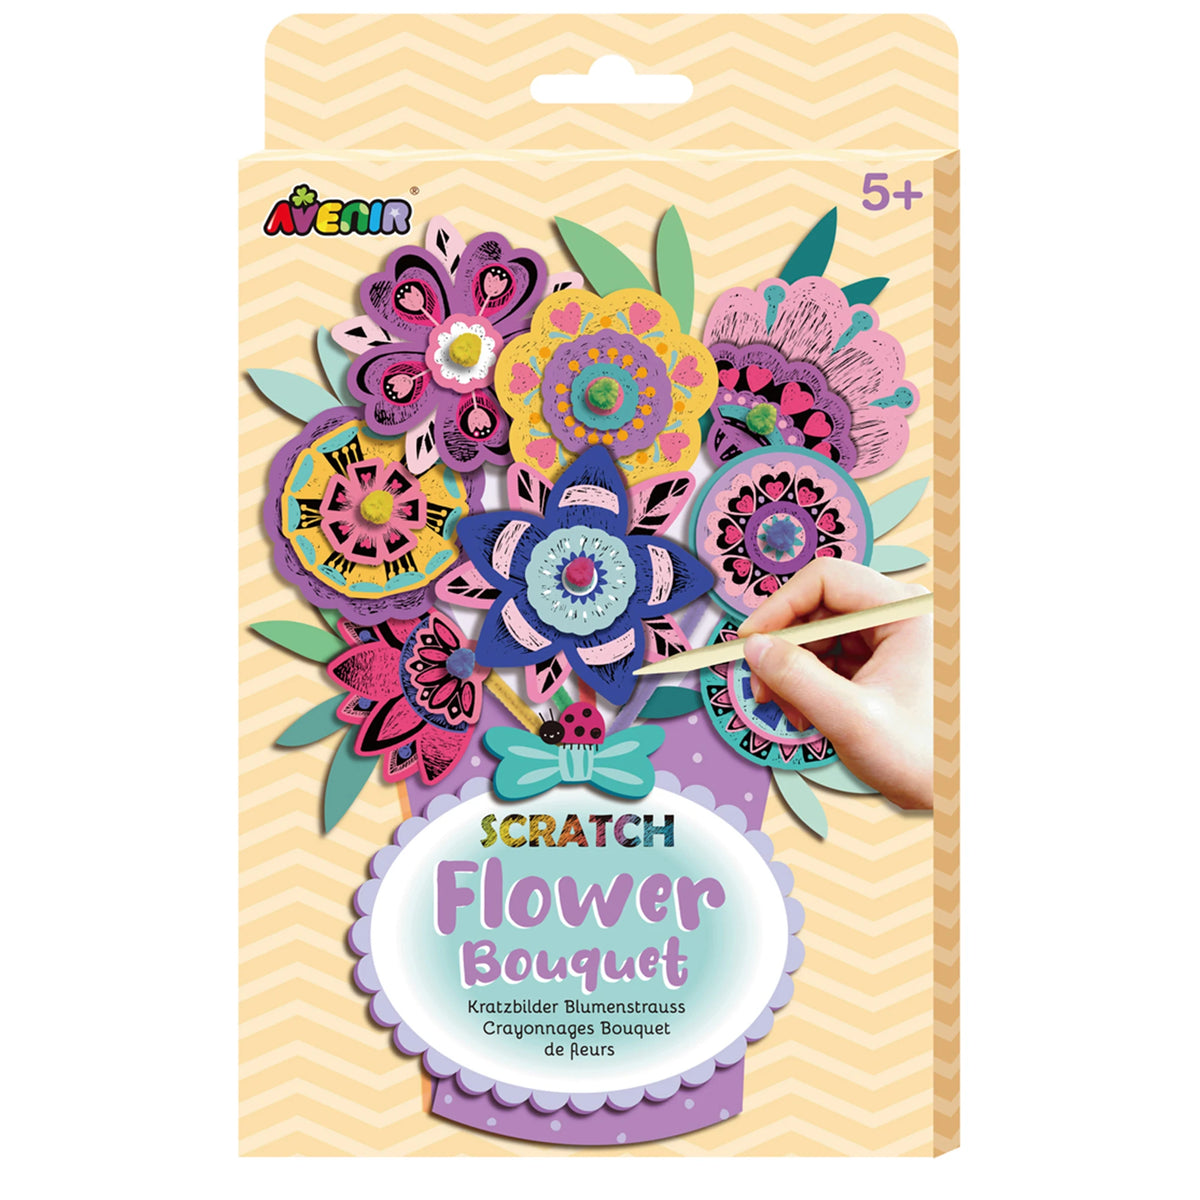 Flower Scratch Bouquet Cover